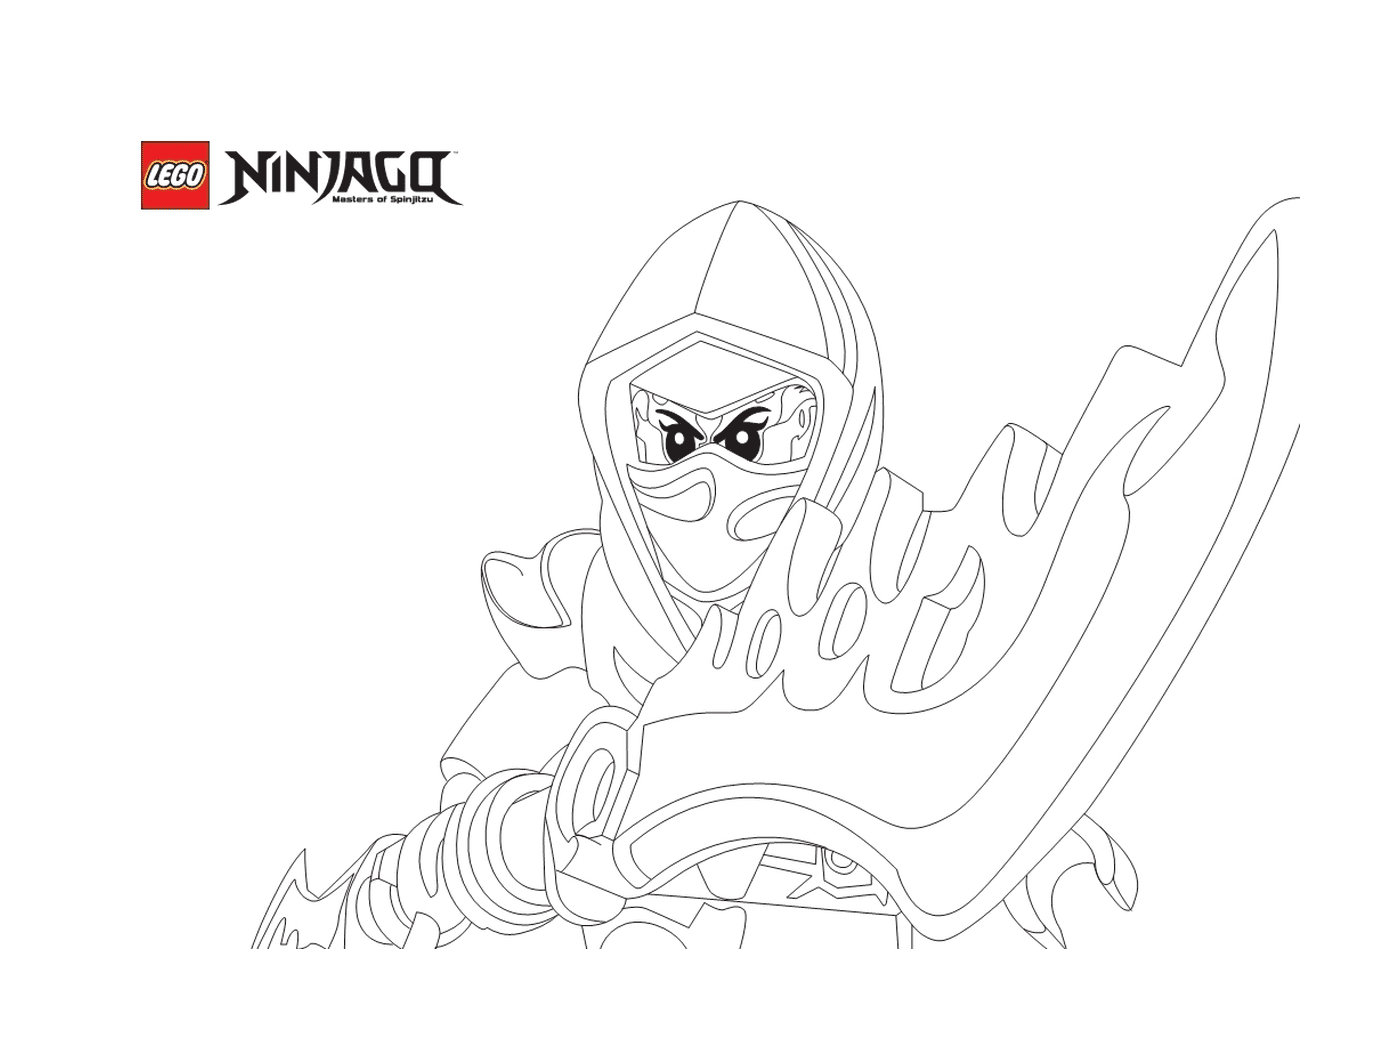  Ninjago with sword ready to attack 